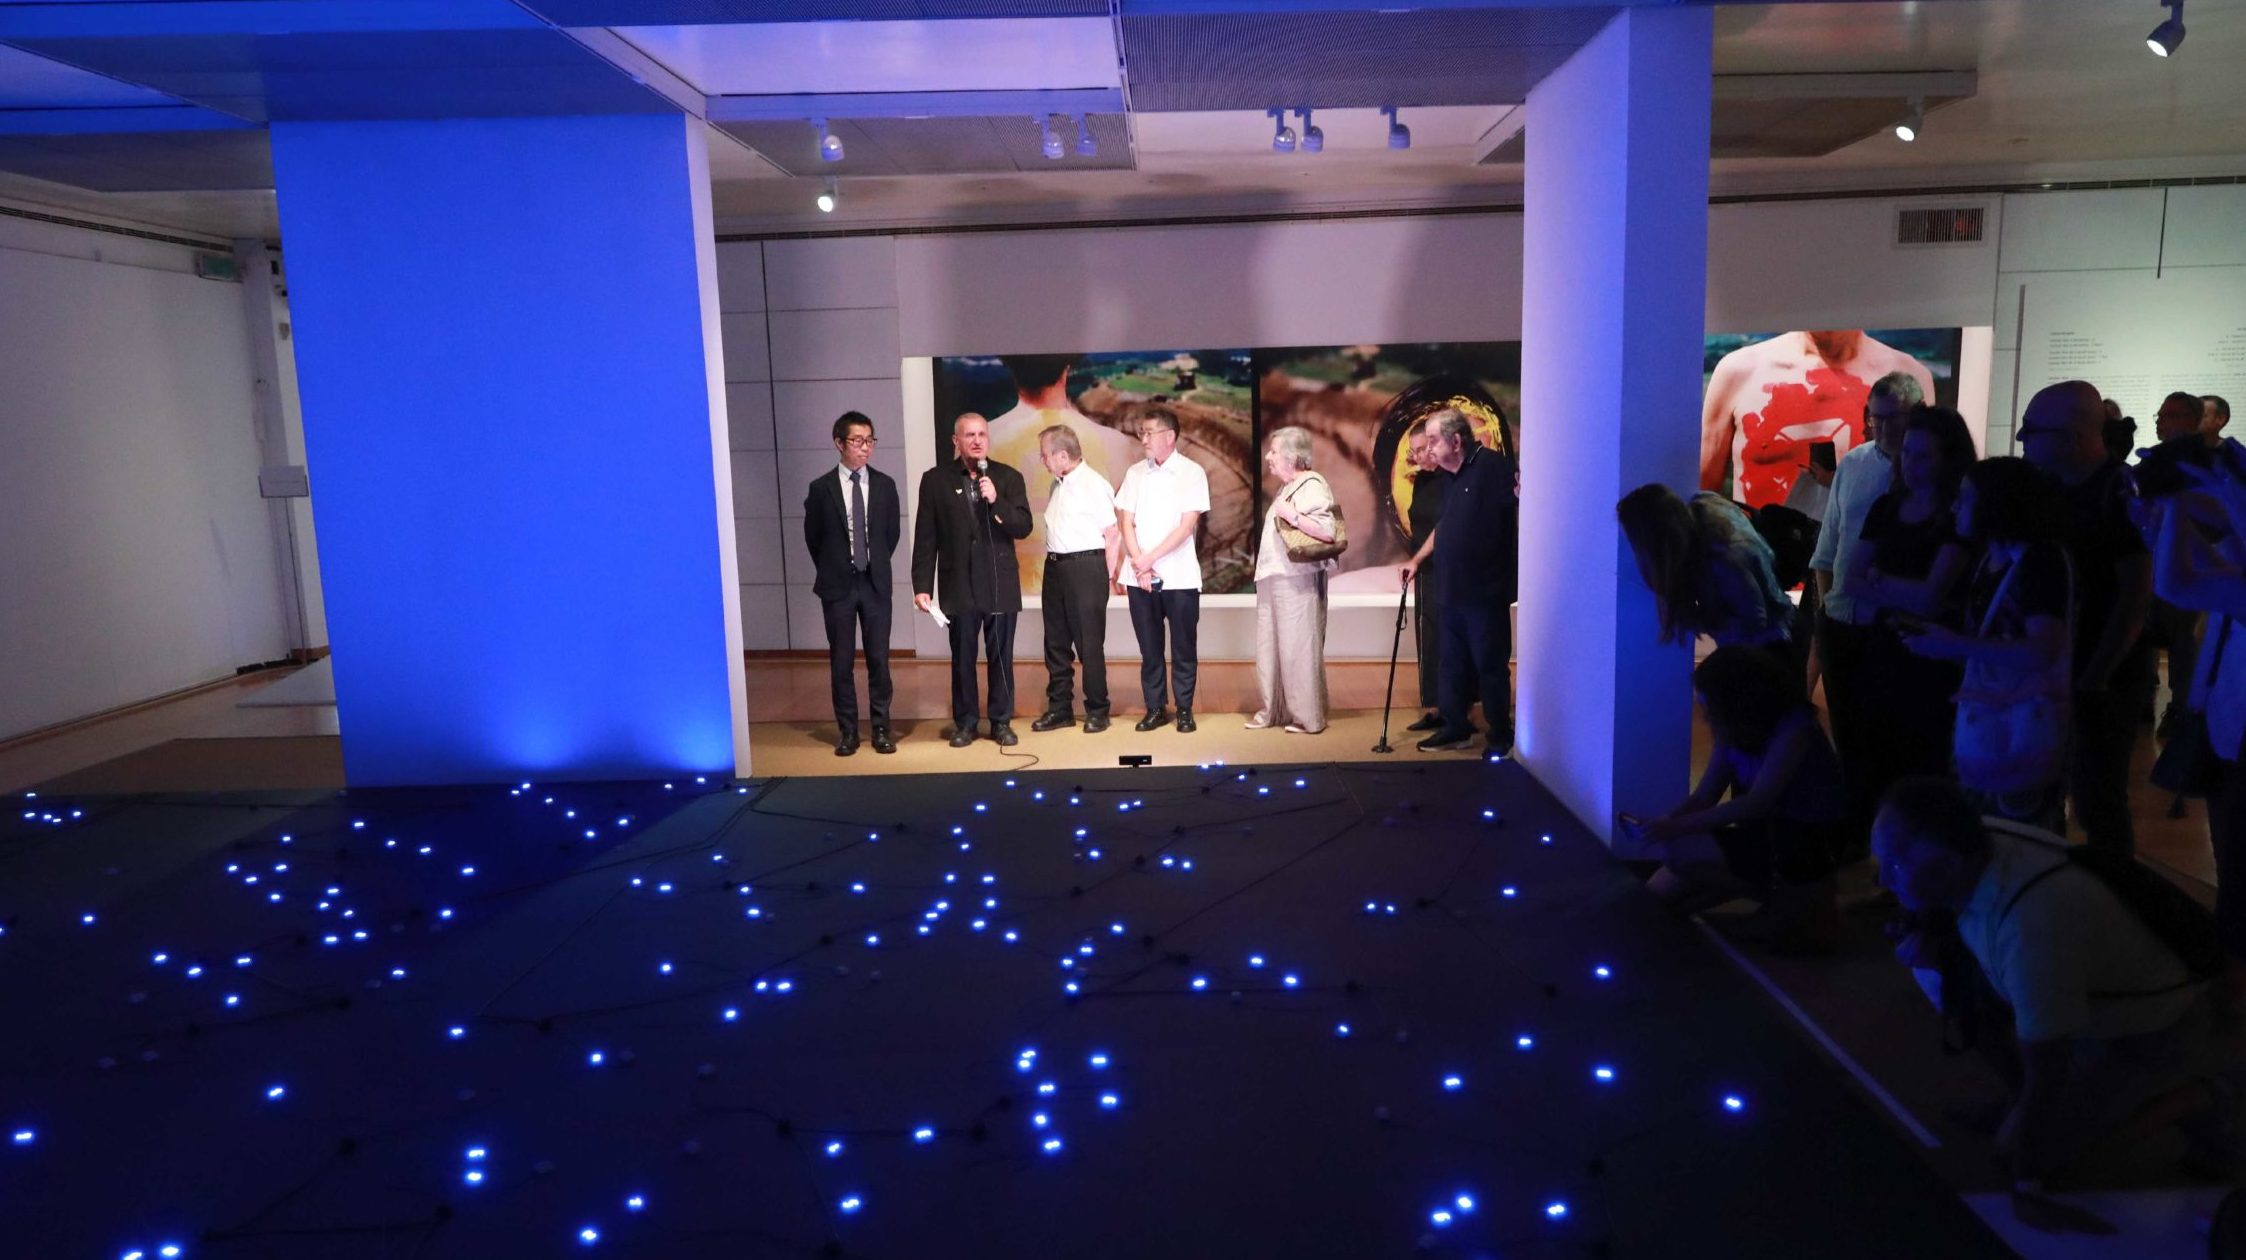 ‘I Owe Sugihara My Life’: New Israeli Expo Tells Story of Japanese Holocaust Hero